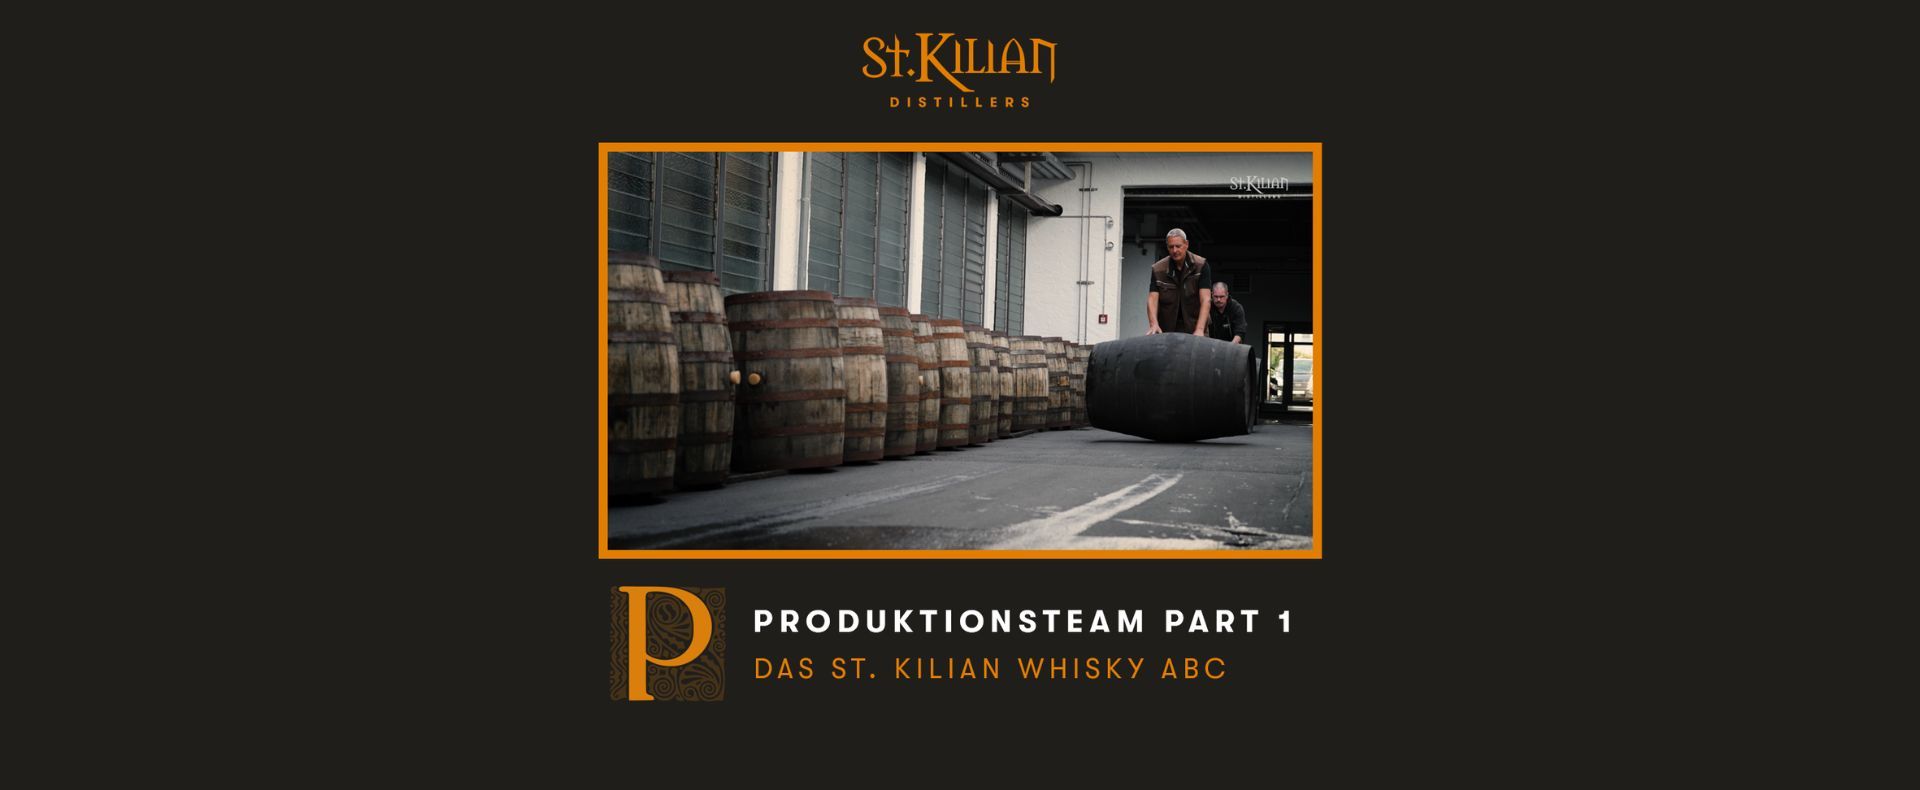 Whisky ABC - P like Production Team Part 1